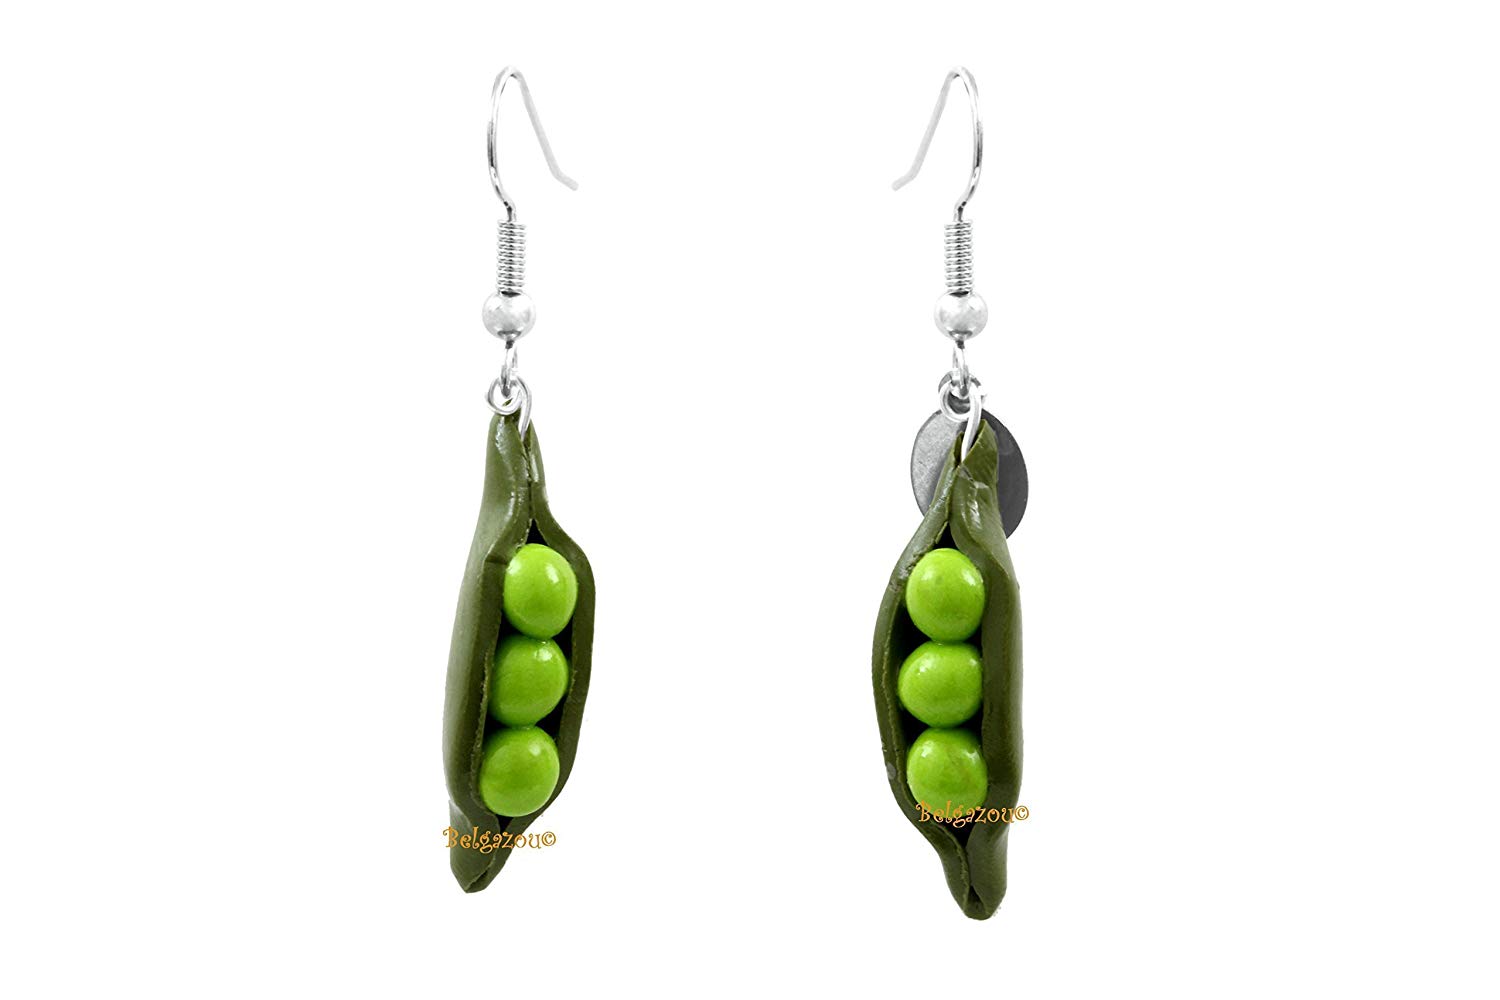 Lady-Charms - Handmade in France -"Peas" earrings